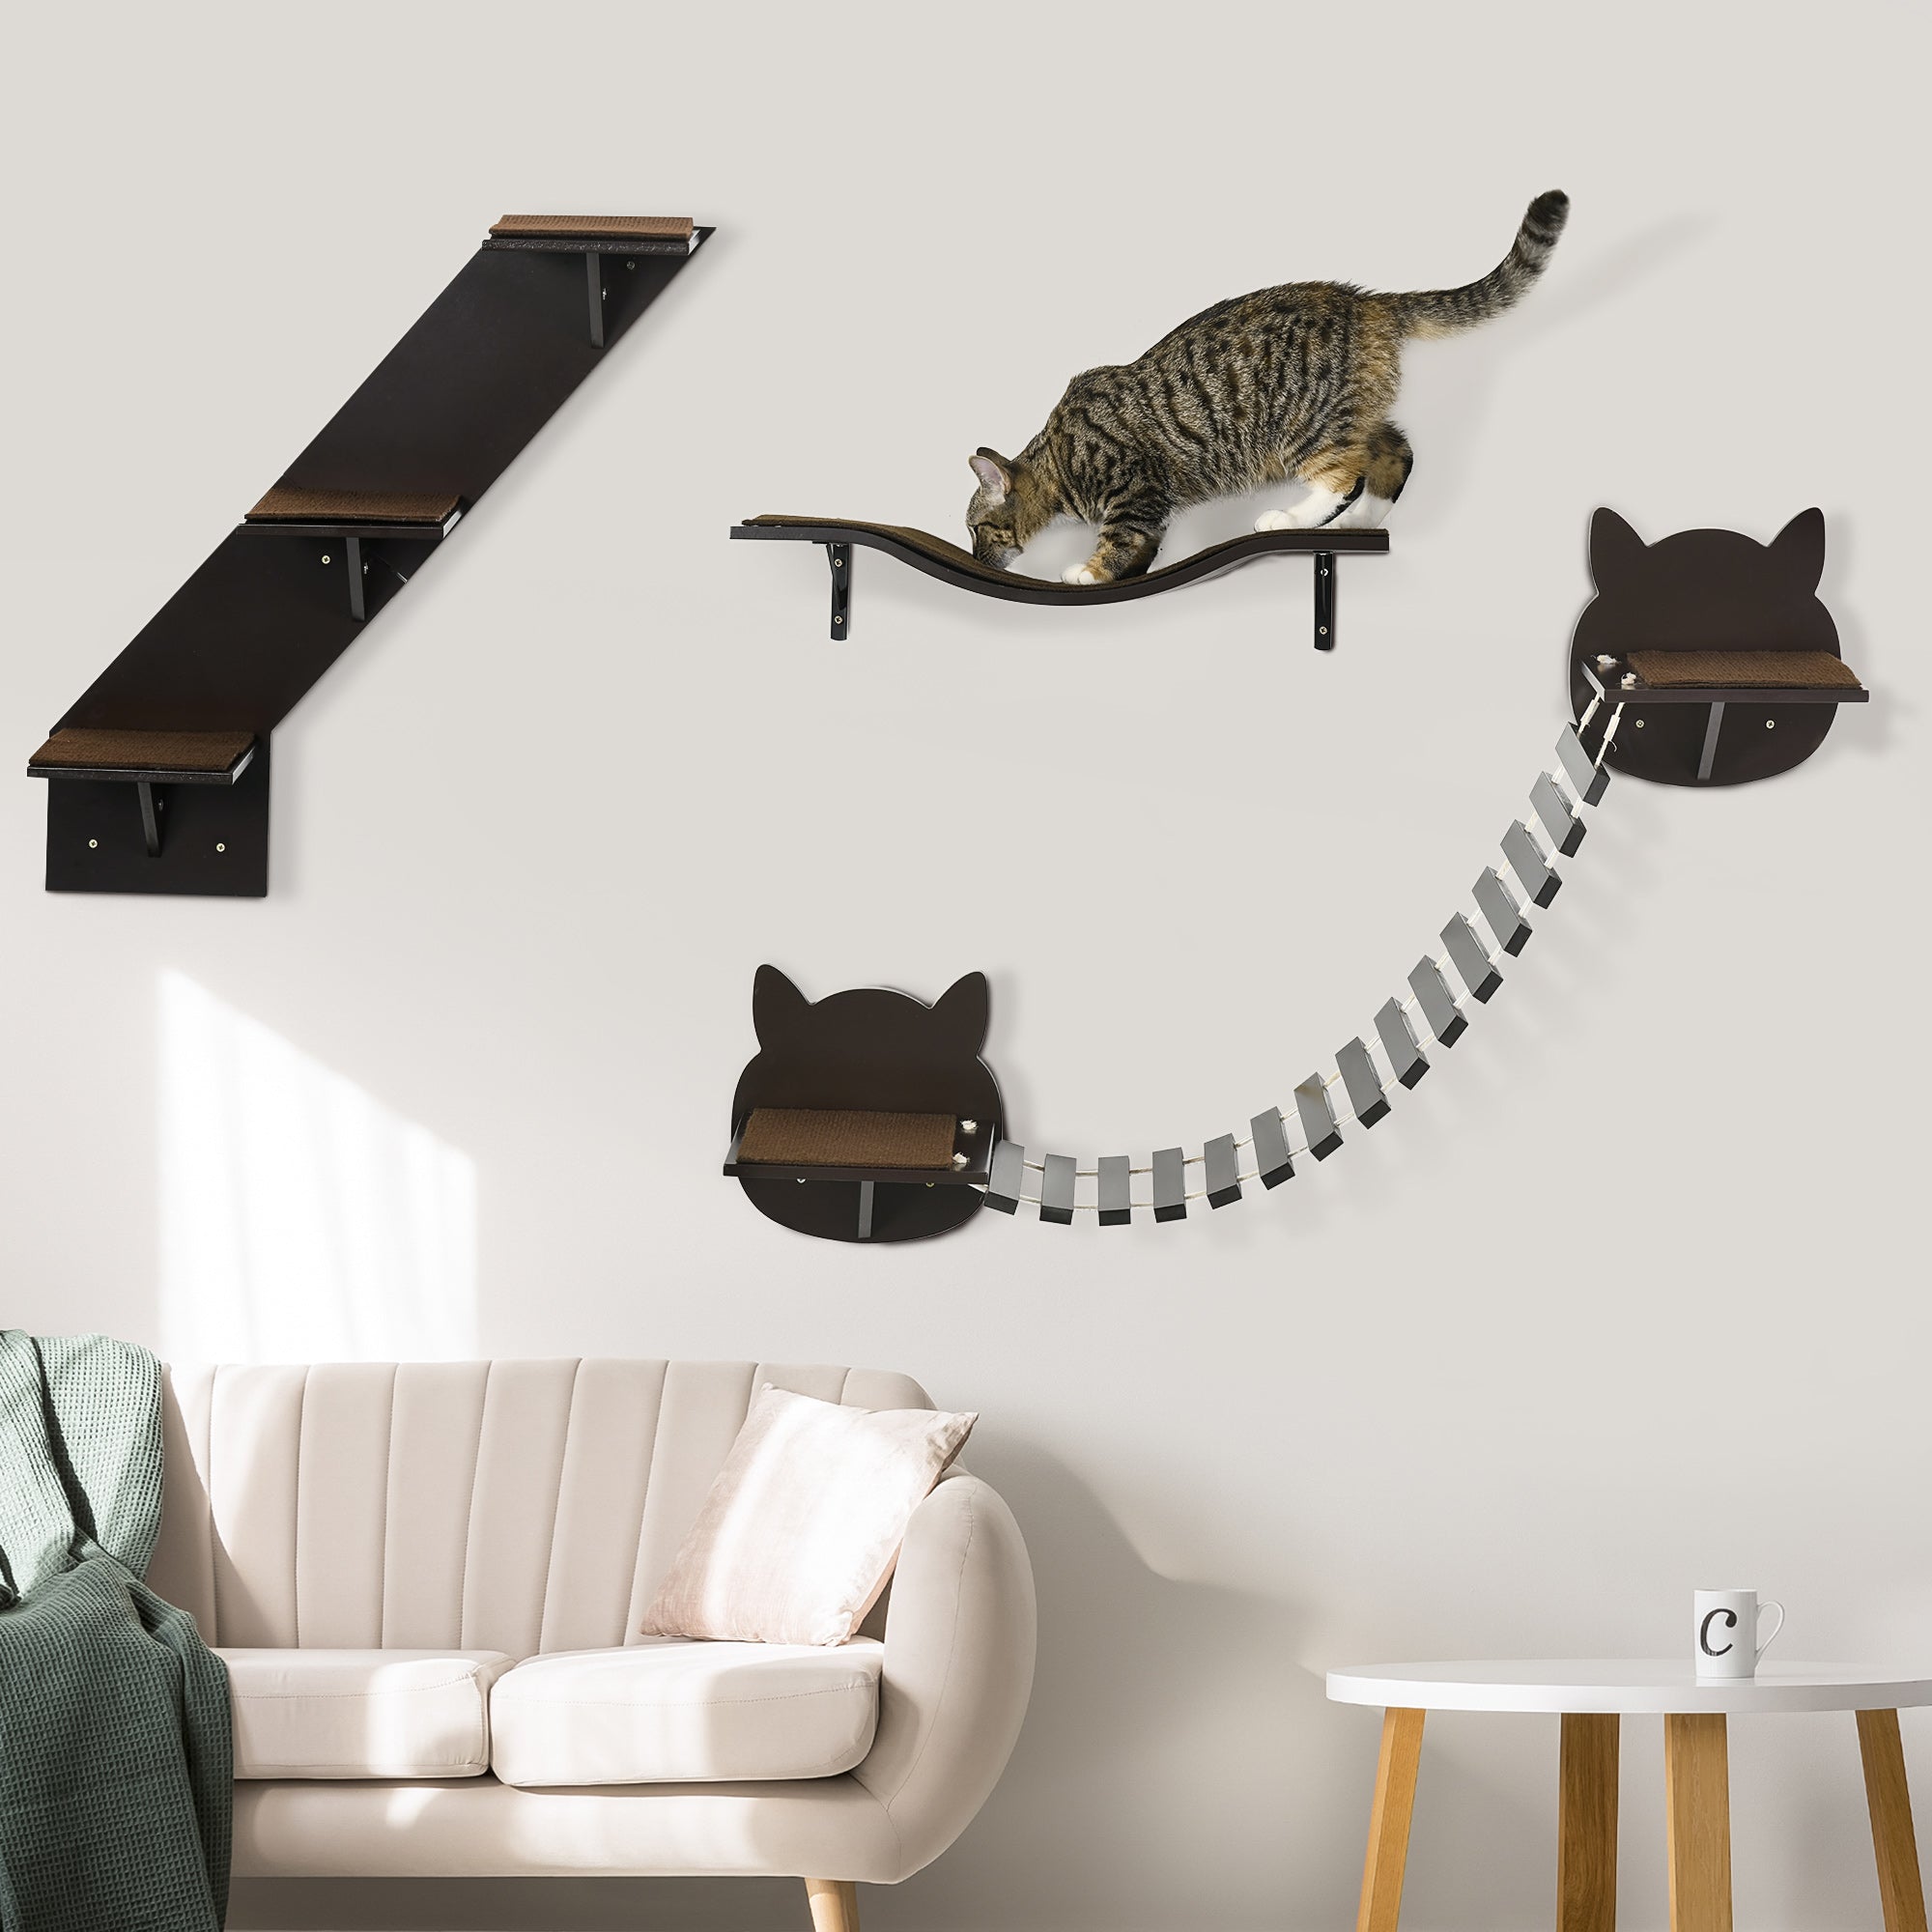 3PCs Wall-mounted Cats Shelves, Cat Climbing Shelf Set, Kitten Activity Center with Jumping Platforms, Ladders, Coffee Brown, PawHut,